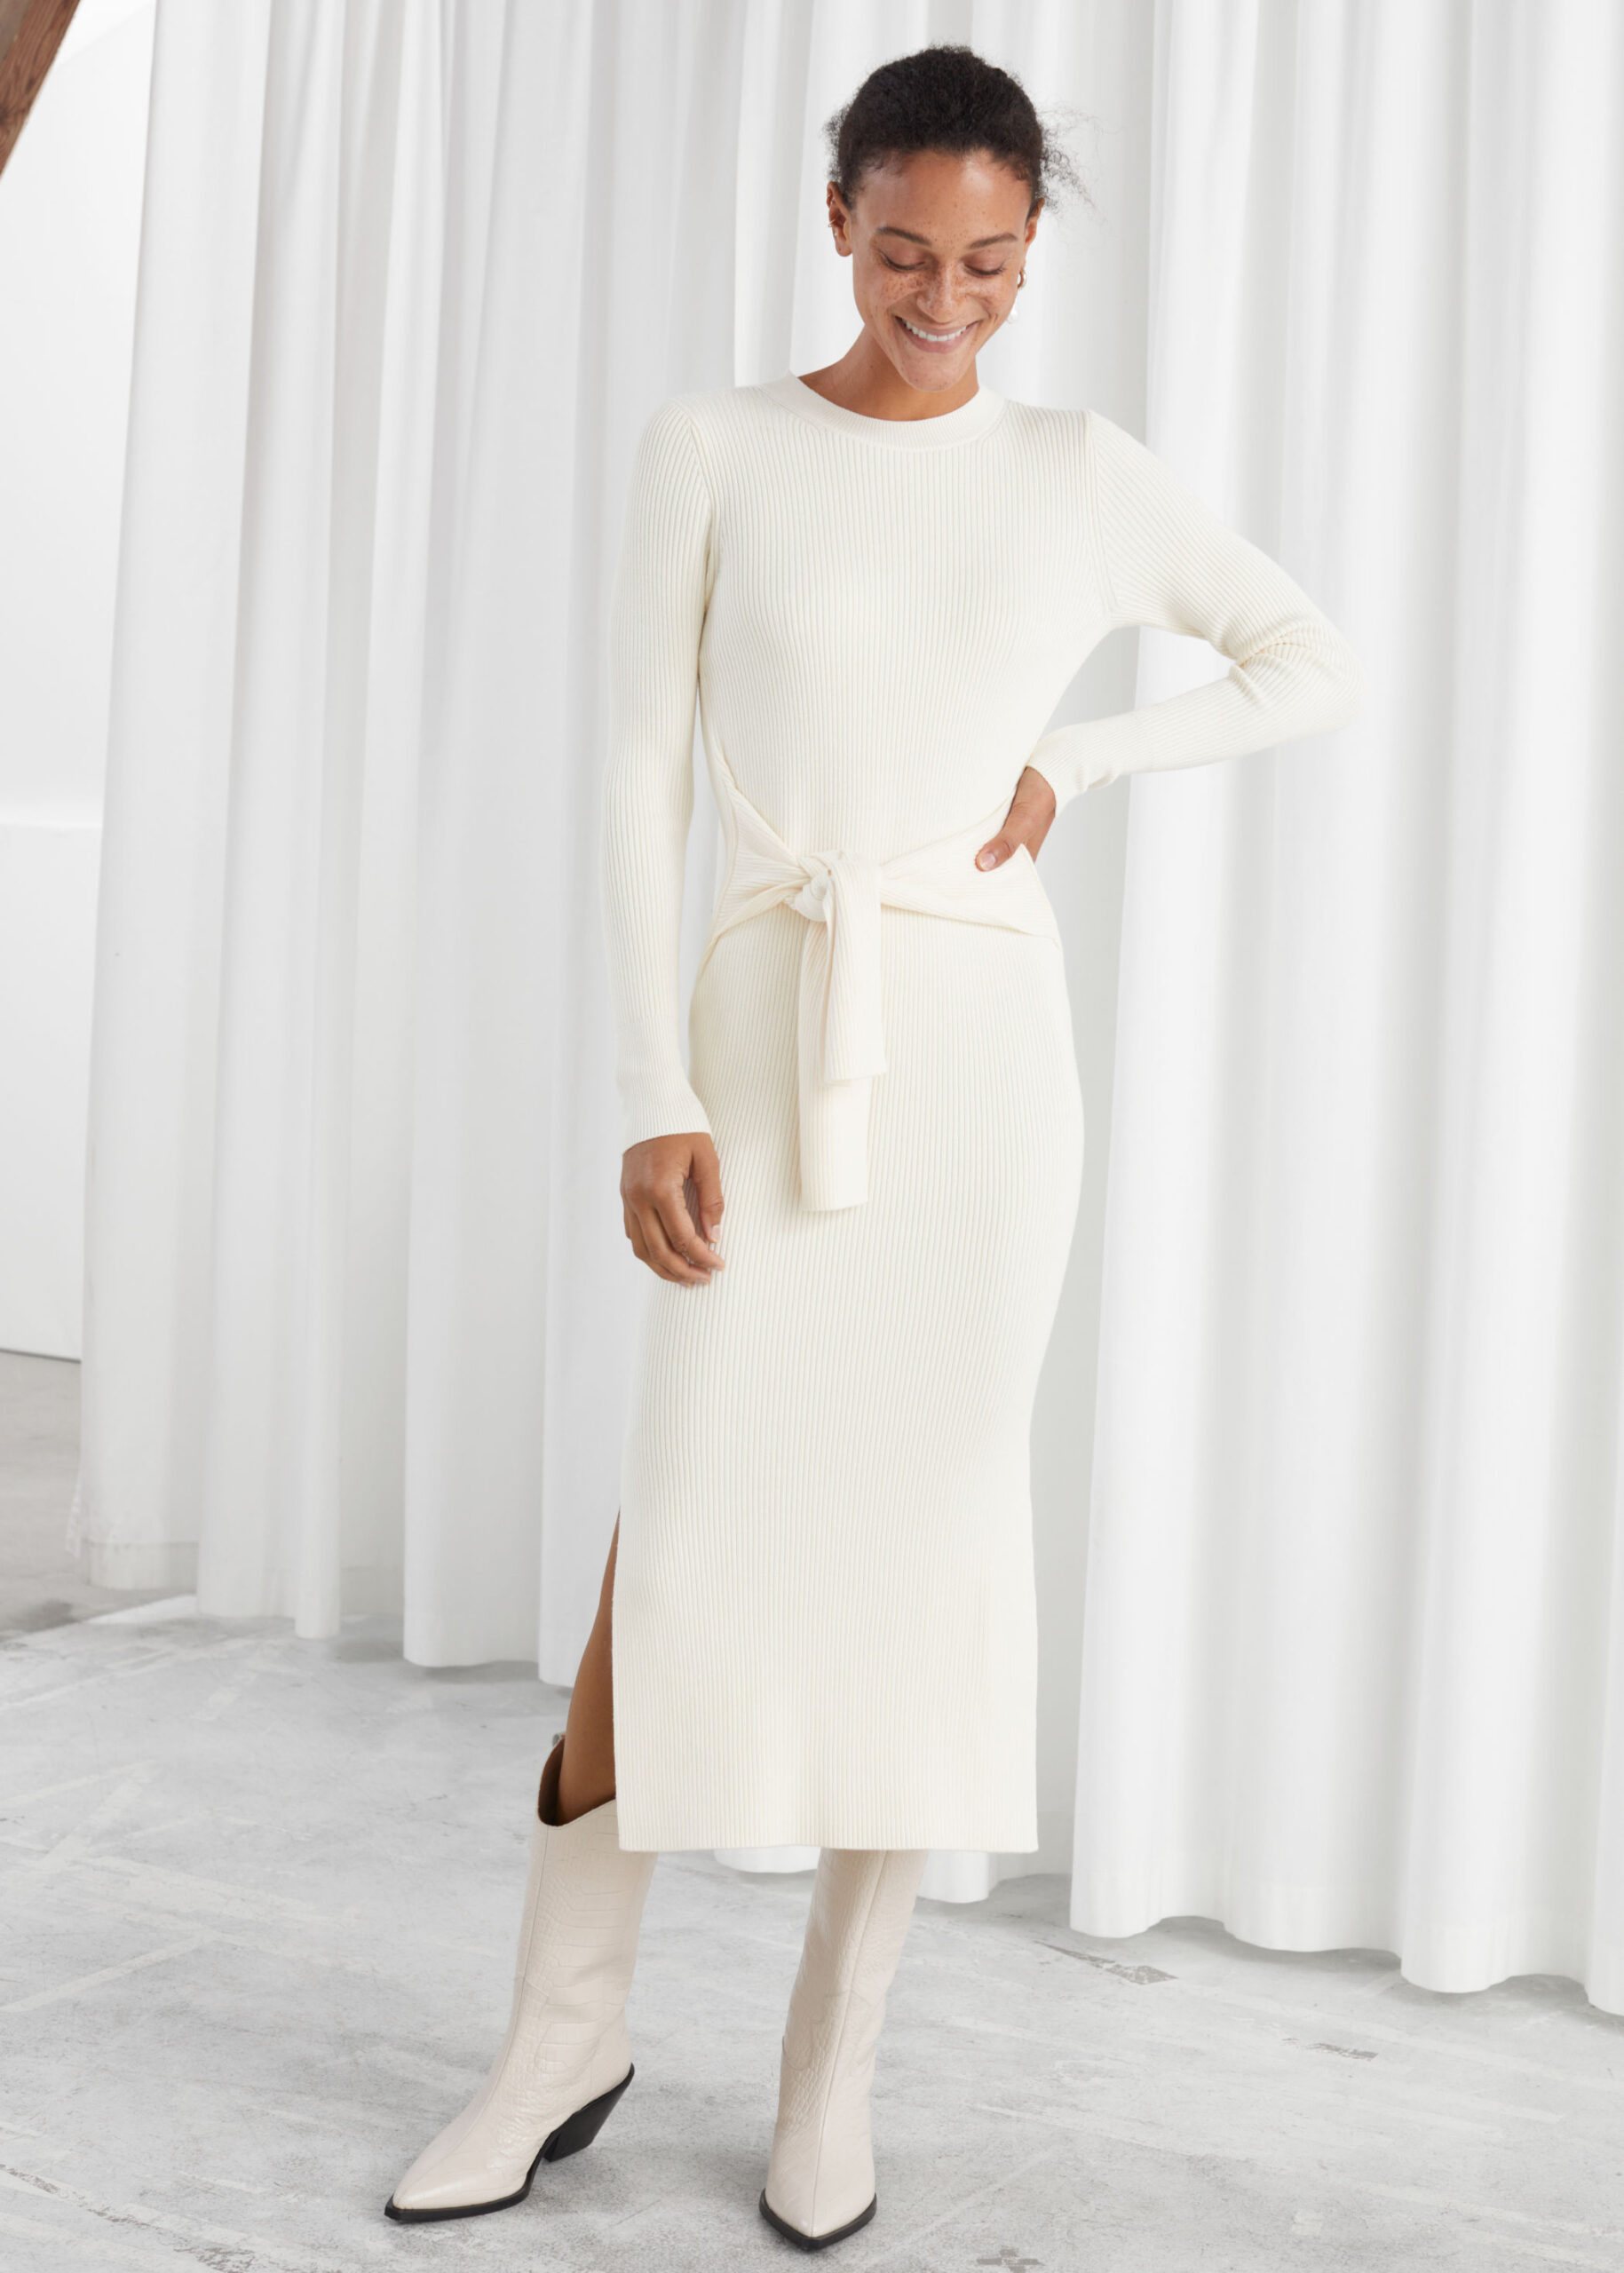 Kristin Cavallari's White Tie Waist Sweater Dress